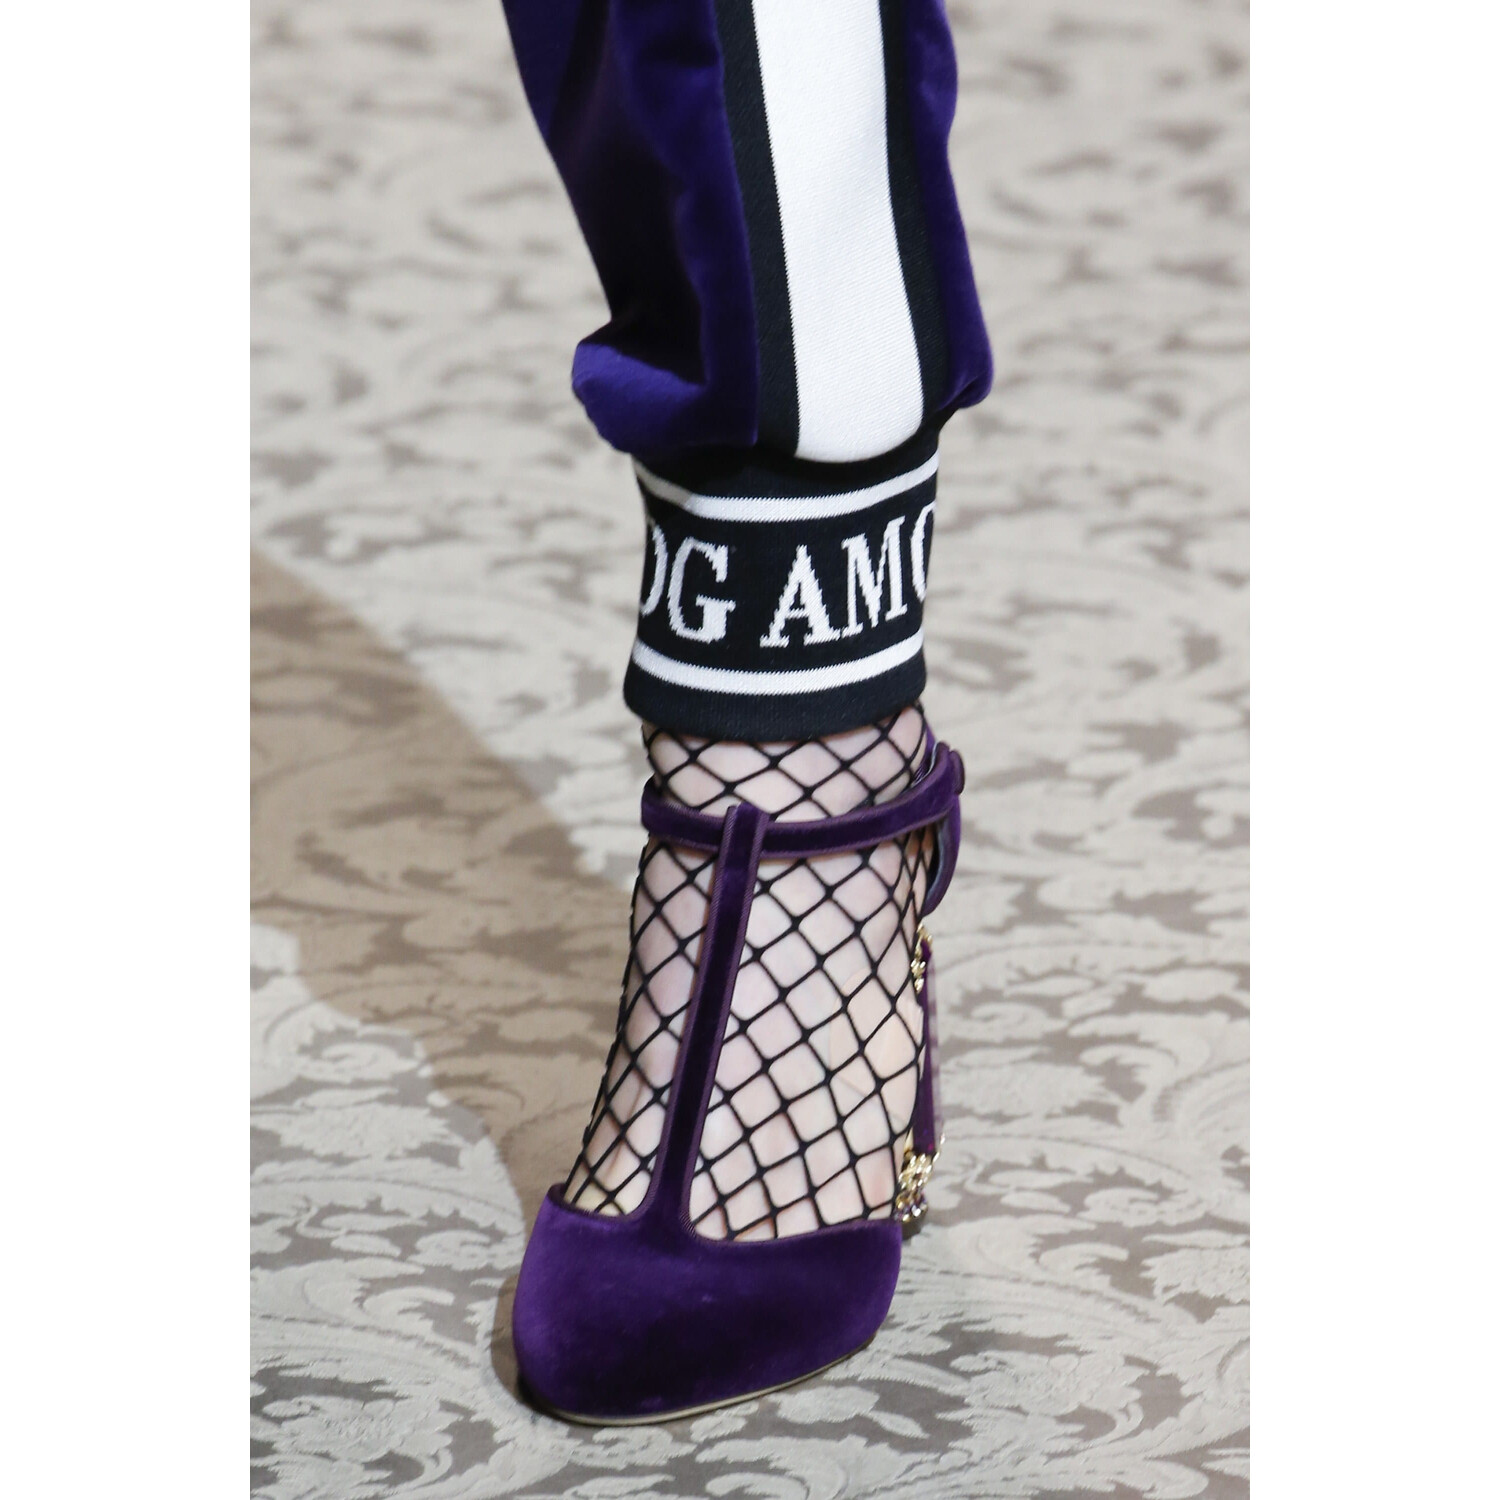 Фото Details Dolce and Gabbana Fall 2018 Ready-to-Wear , Детали Дольче и Габбана осень зима 2018 , Fashion show , неделя моды в Милане , MFW , Mainstyles